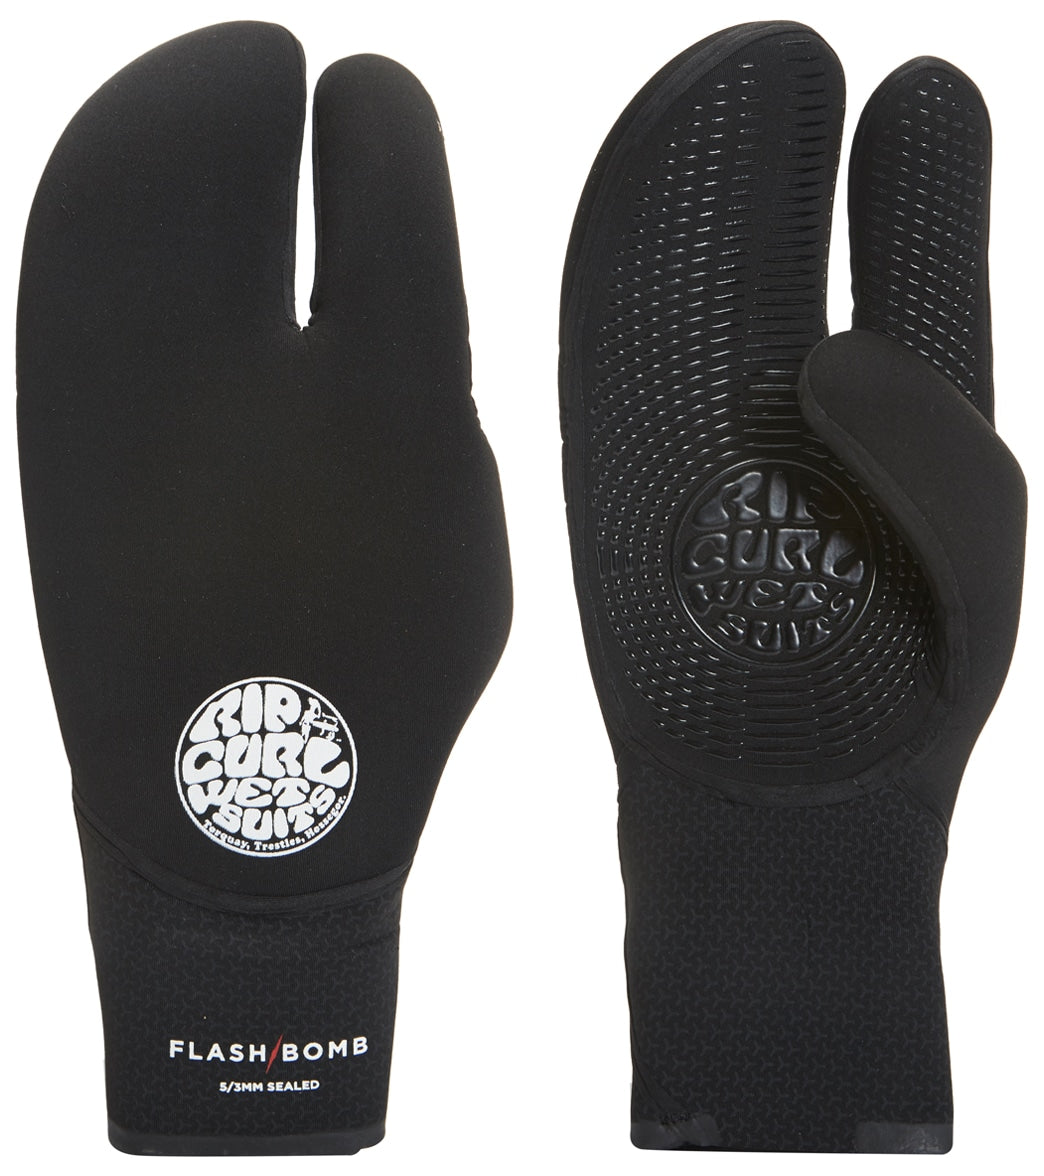 Rip Curl Men's Flashbomb 5/3mm Three Fingers Glove at SwimOutlet.com